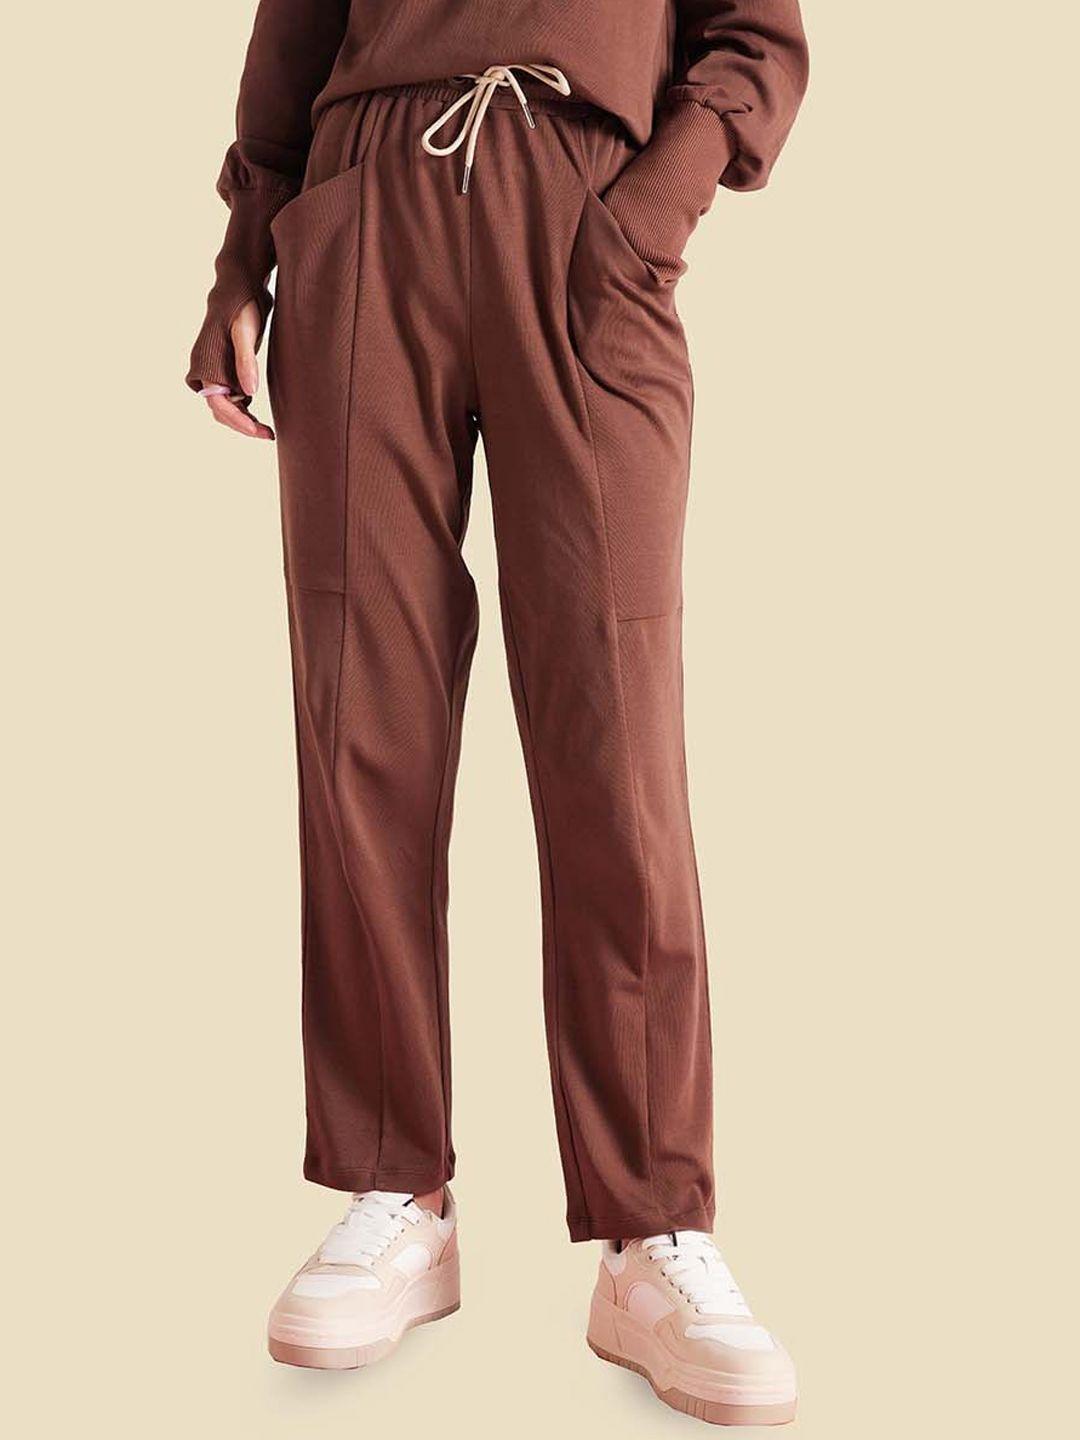 muvazo women cotton mid-rise track pants